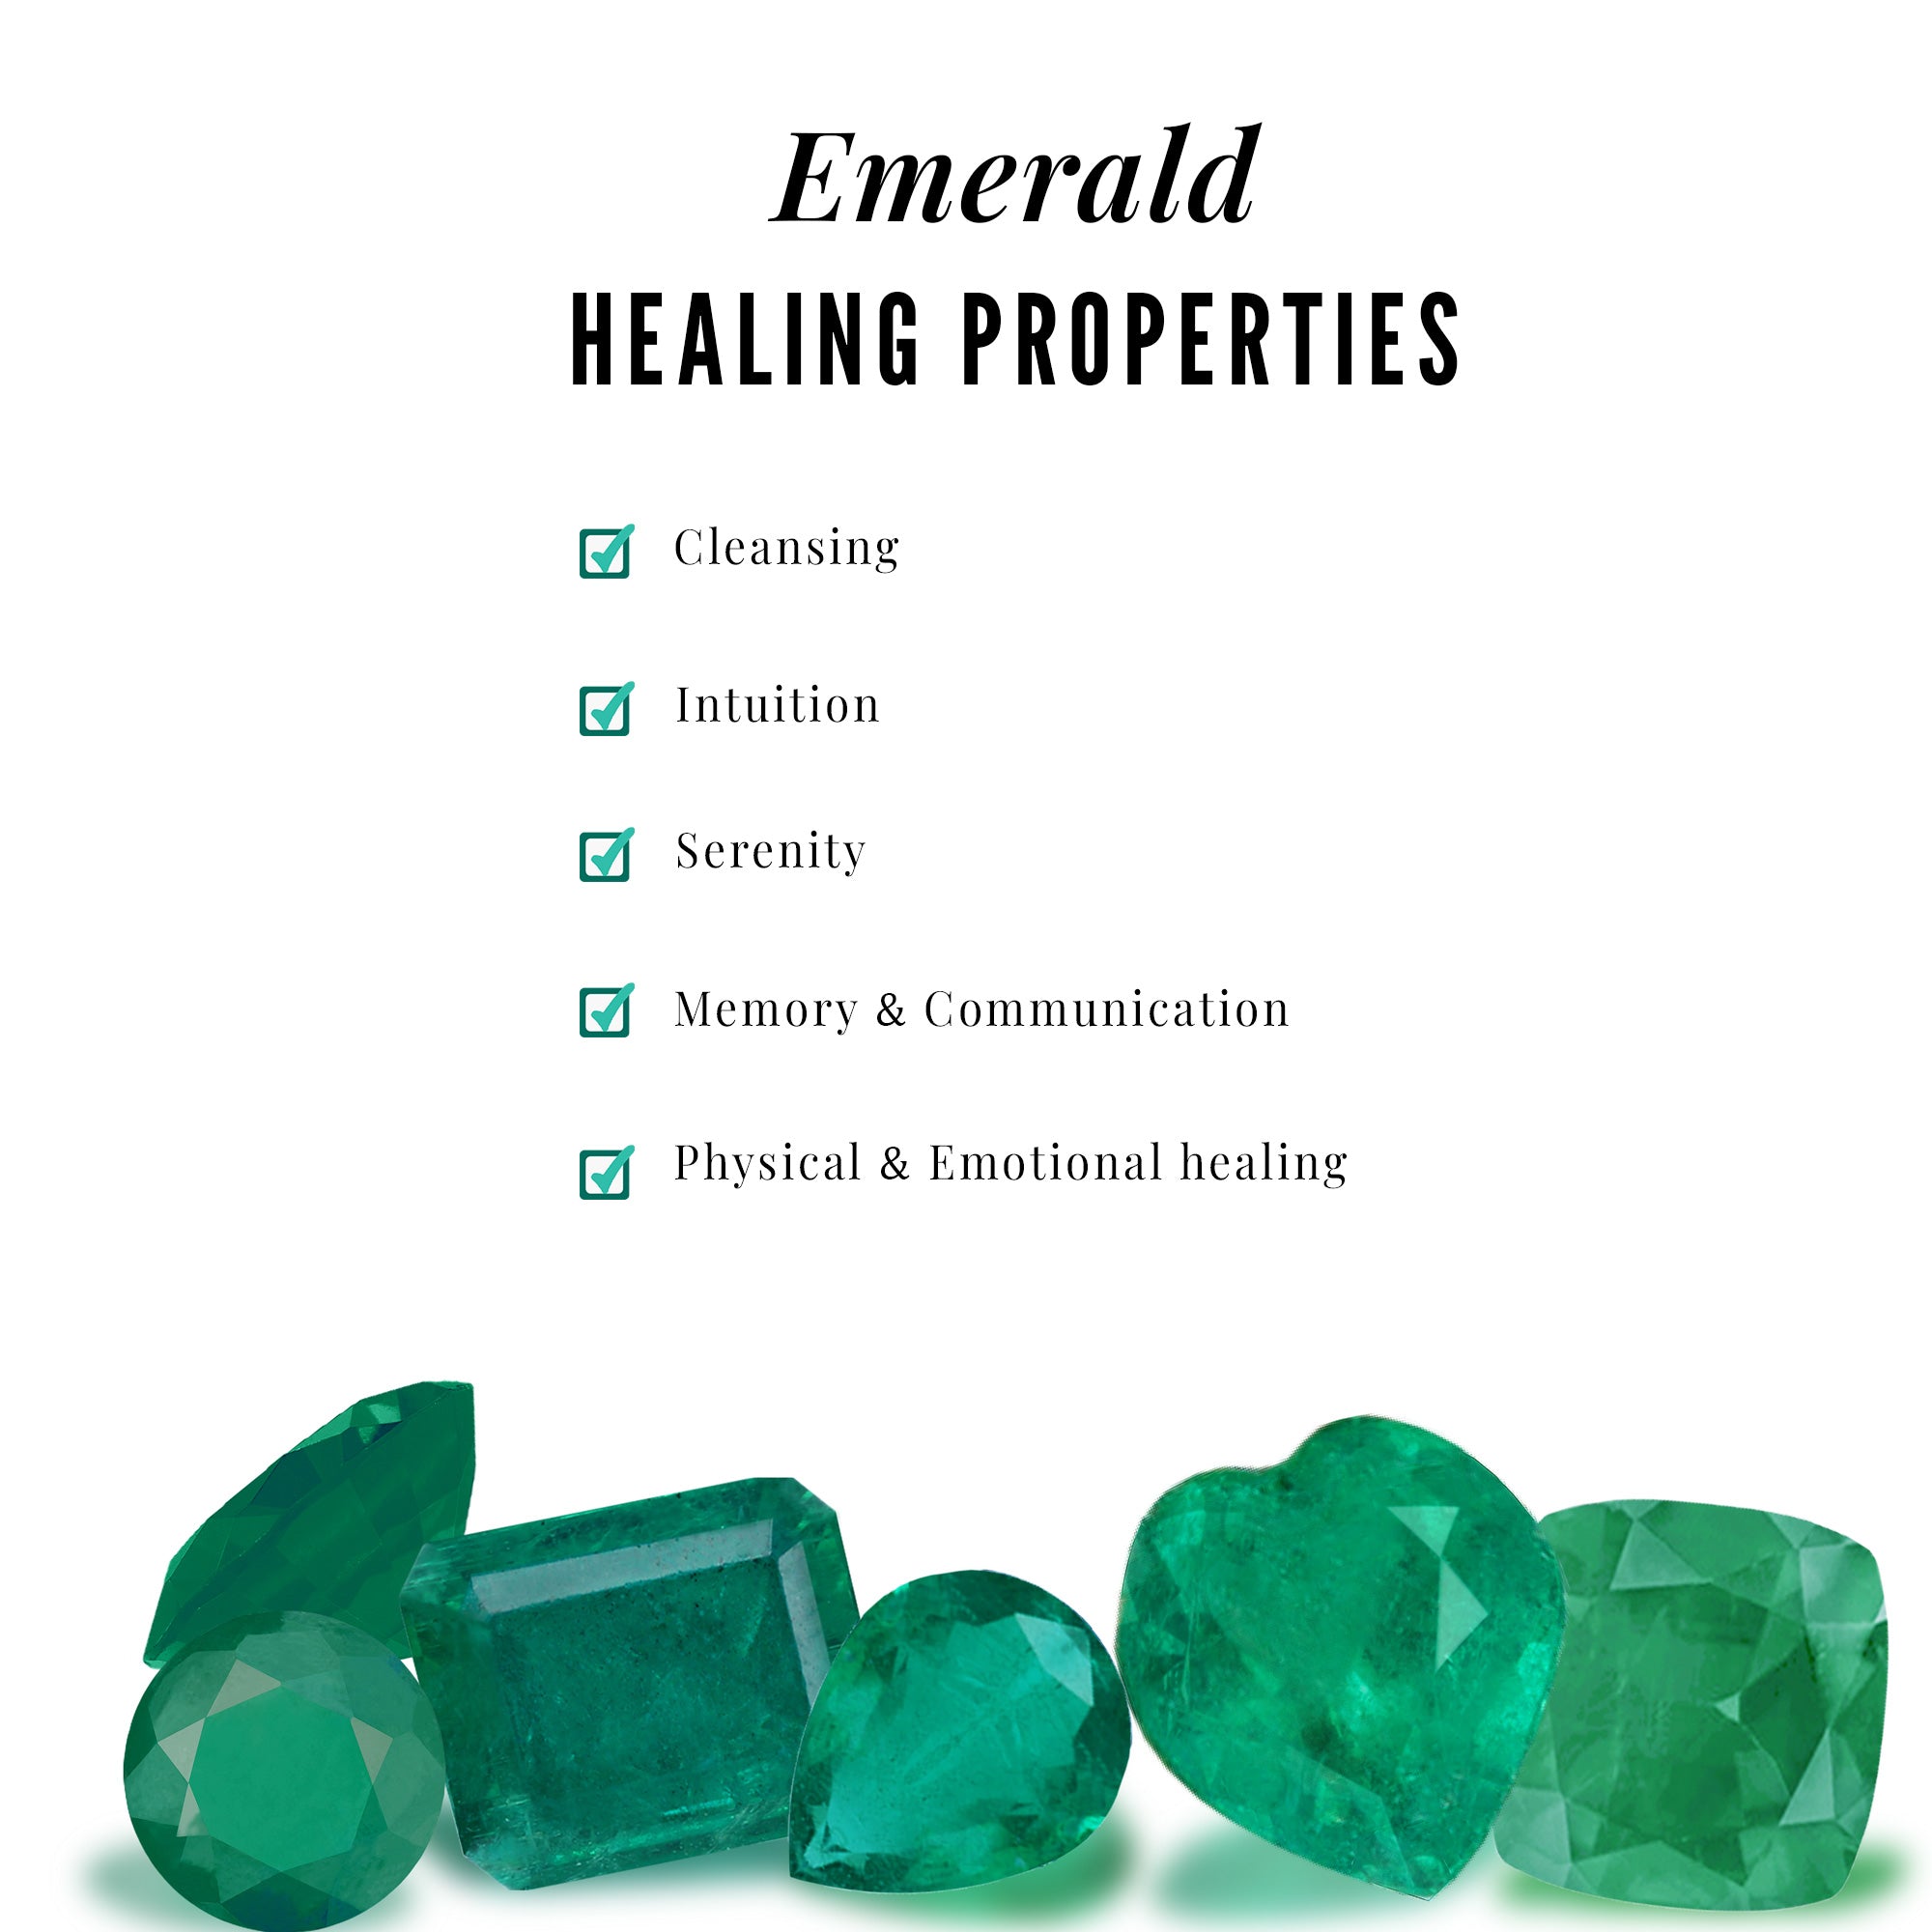 Real Emerald and Diamond Minimal Wedding Ring Emerald - ( AAA ) - Quality - Rosec Jewels